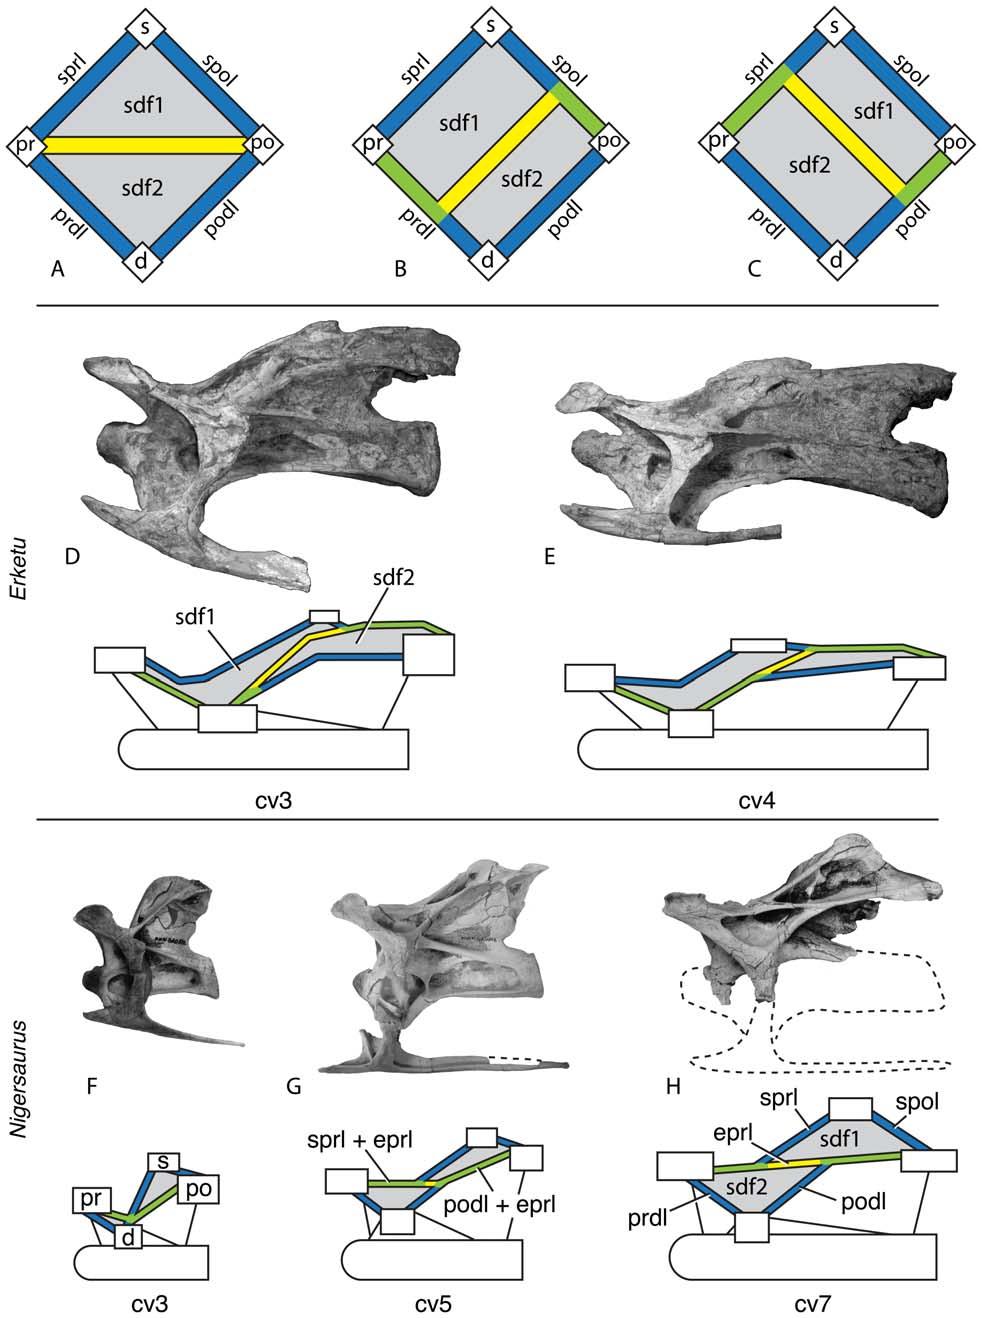 Figure 6. Variable development of the epipophyseal-prezygapophyseal lamina (eprl) and the divided spinodiapophyseal (sdf) in cervical vertebrae.